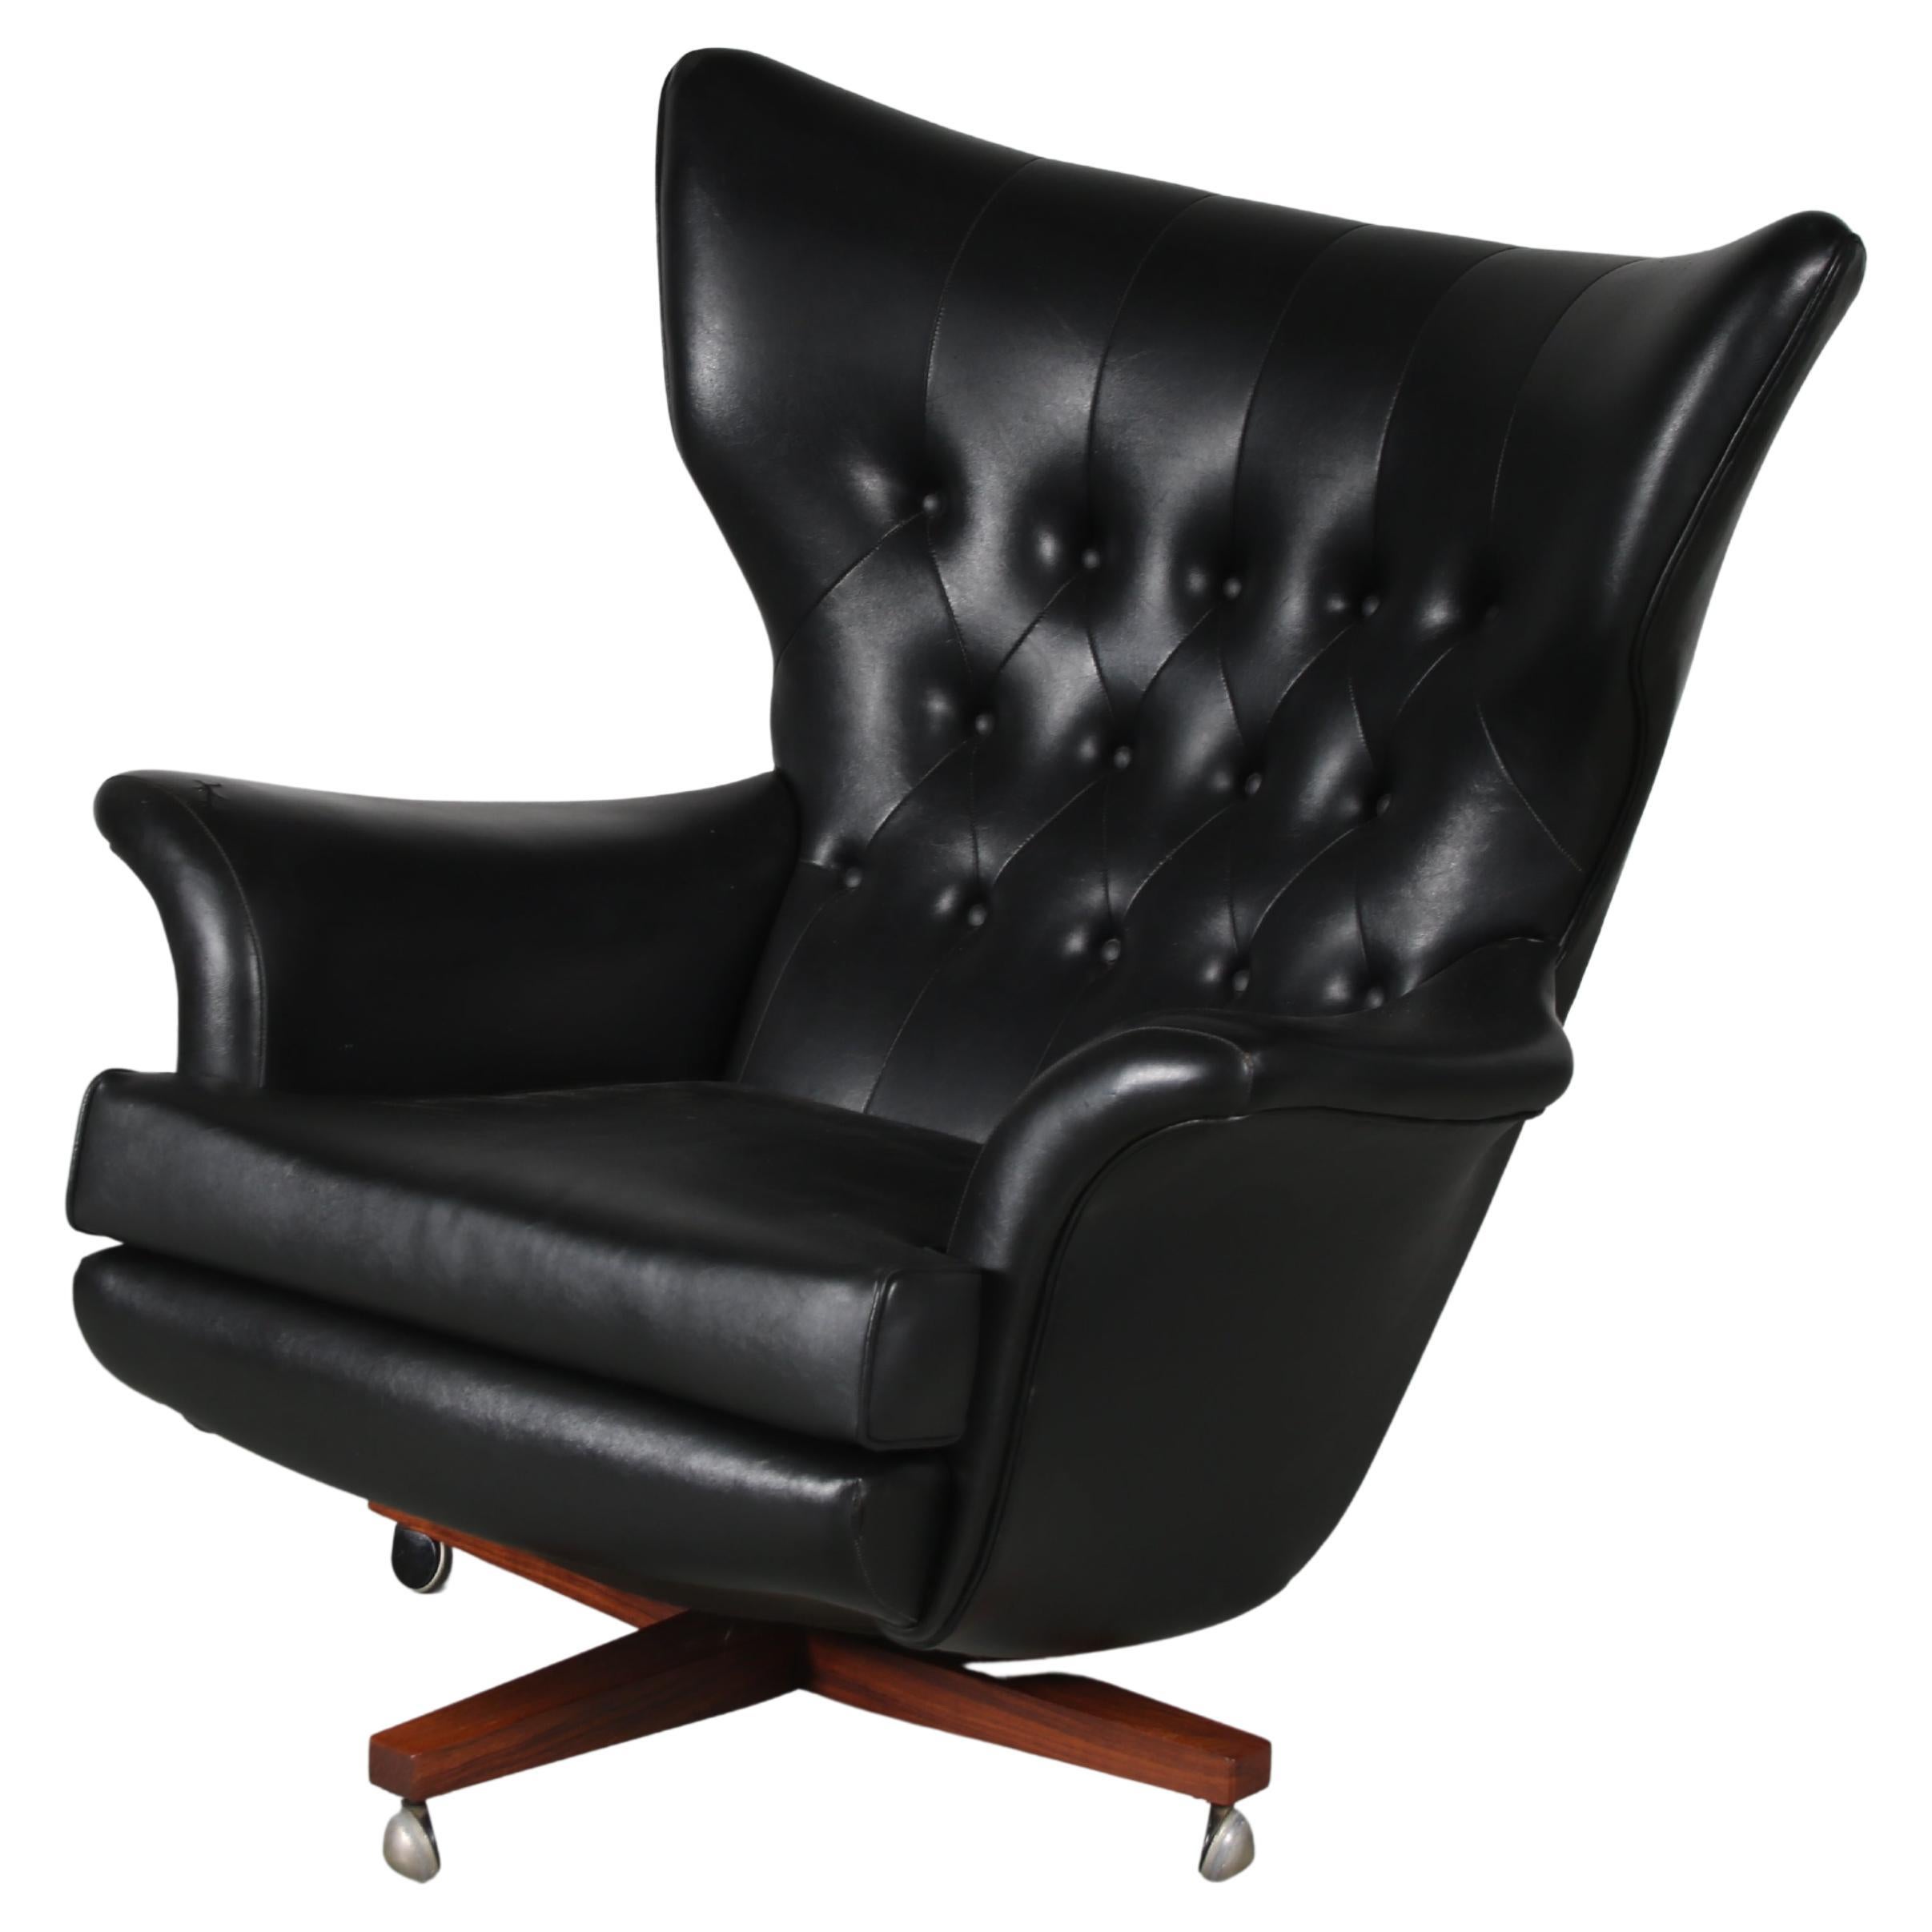 Model 6250 “Villain Chair” by G-Plan, UK, 1960